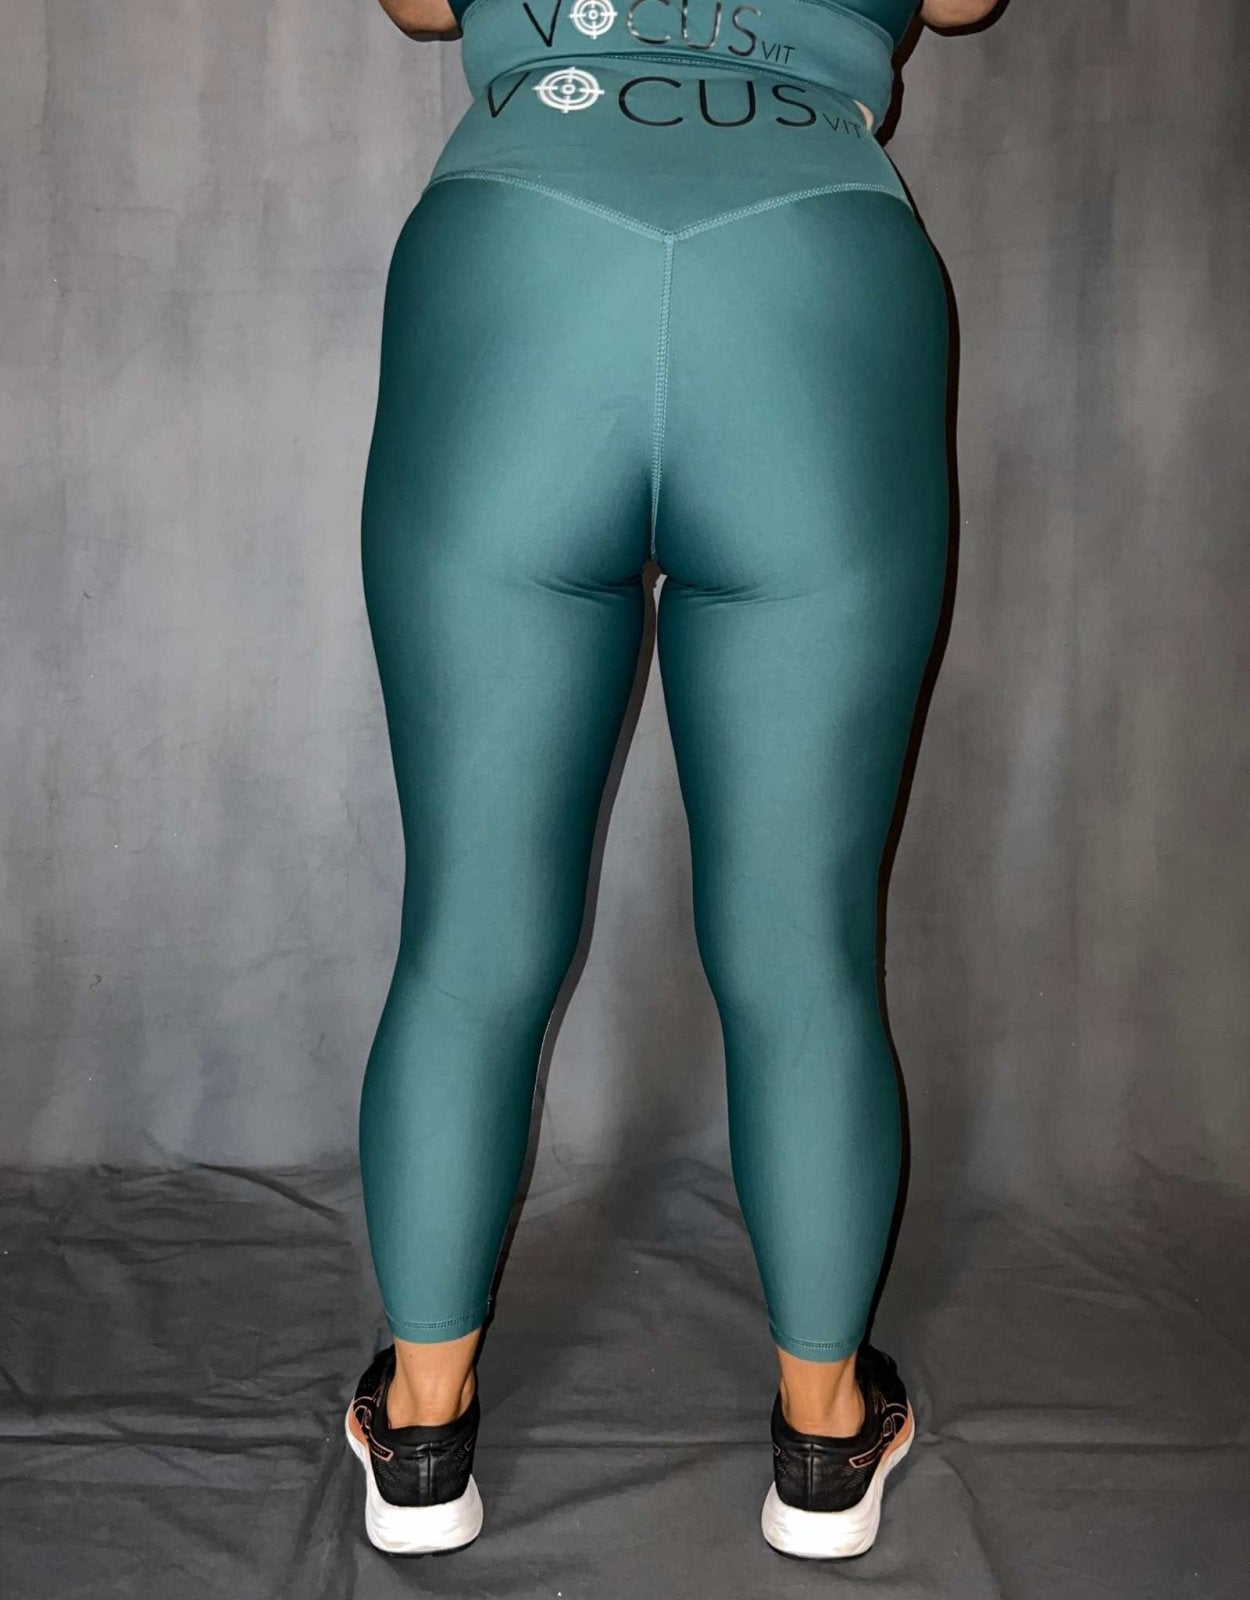 Spalding Women's Activewear 28 inch Inseam Legging with Pockets, Azalea, M  at Amazon Women's Clothing store